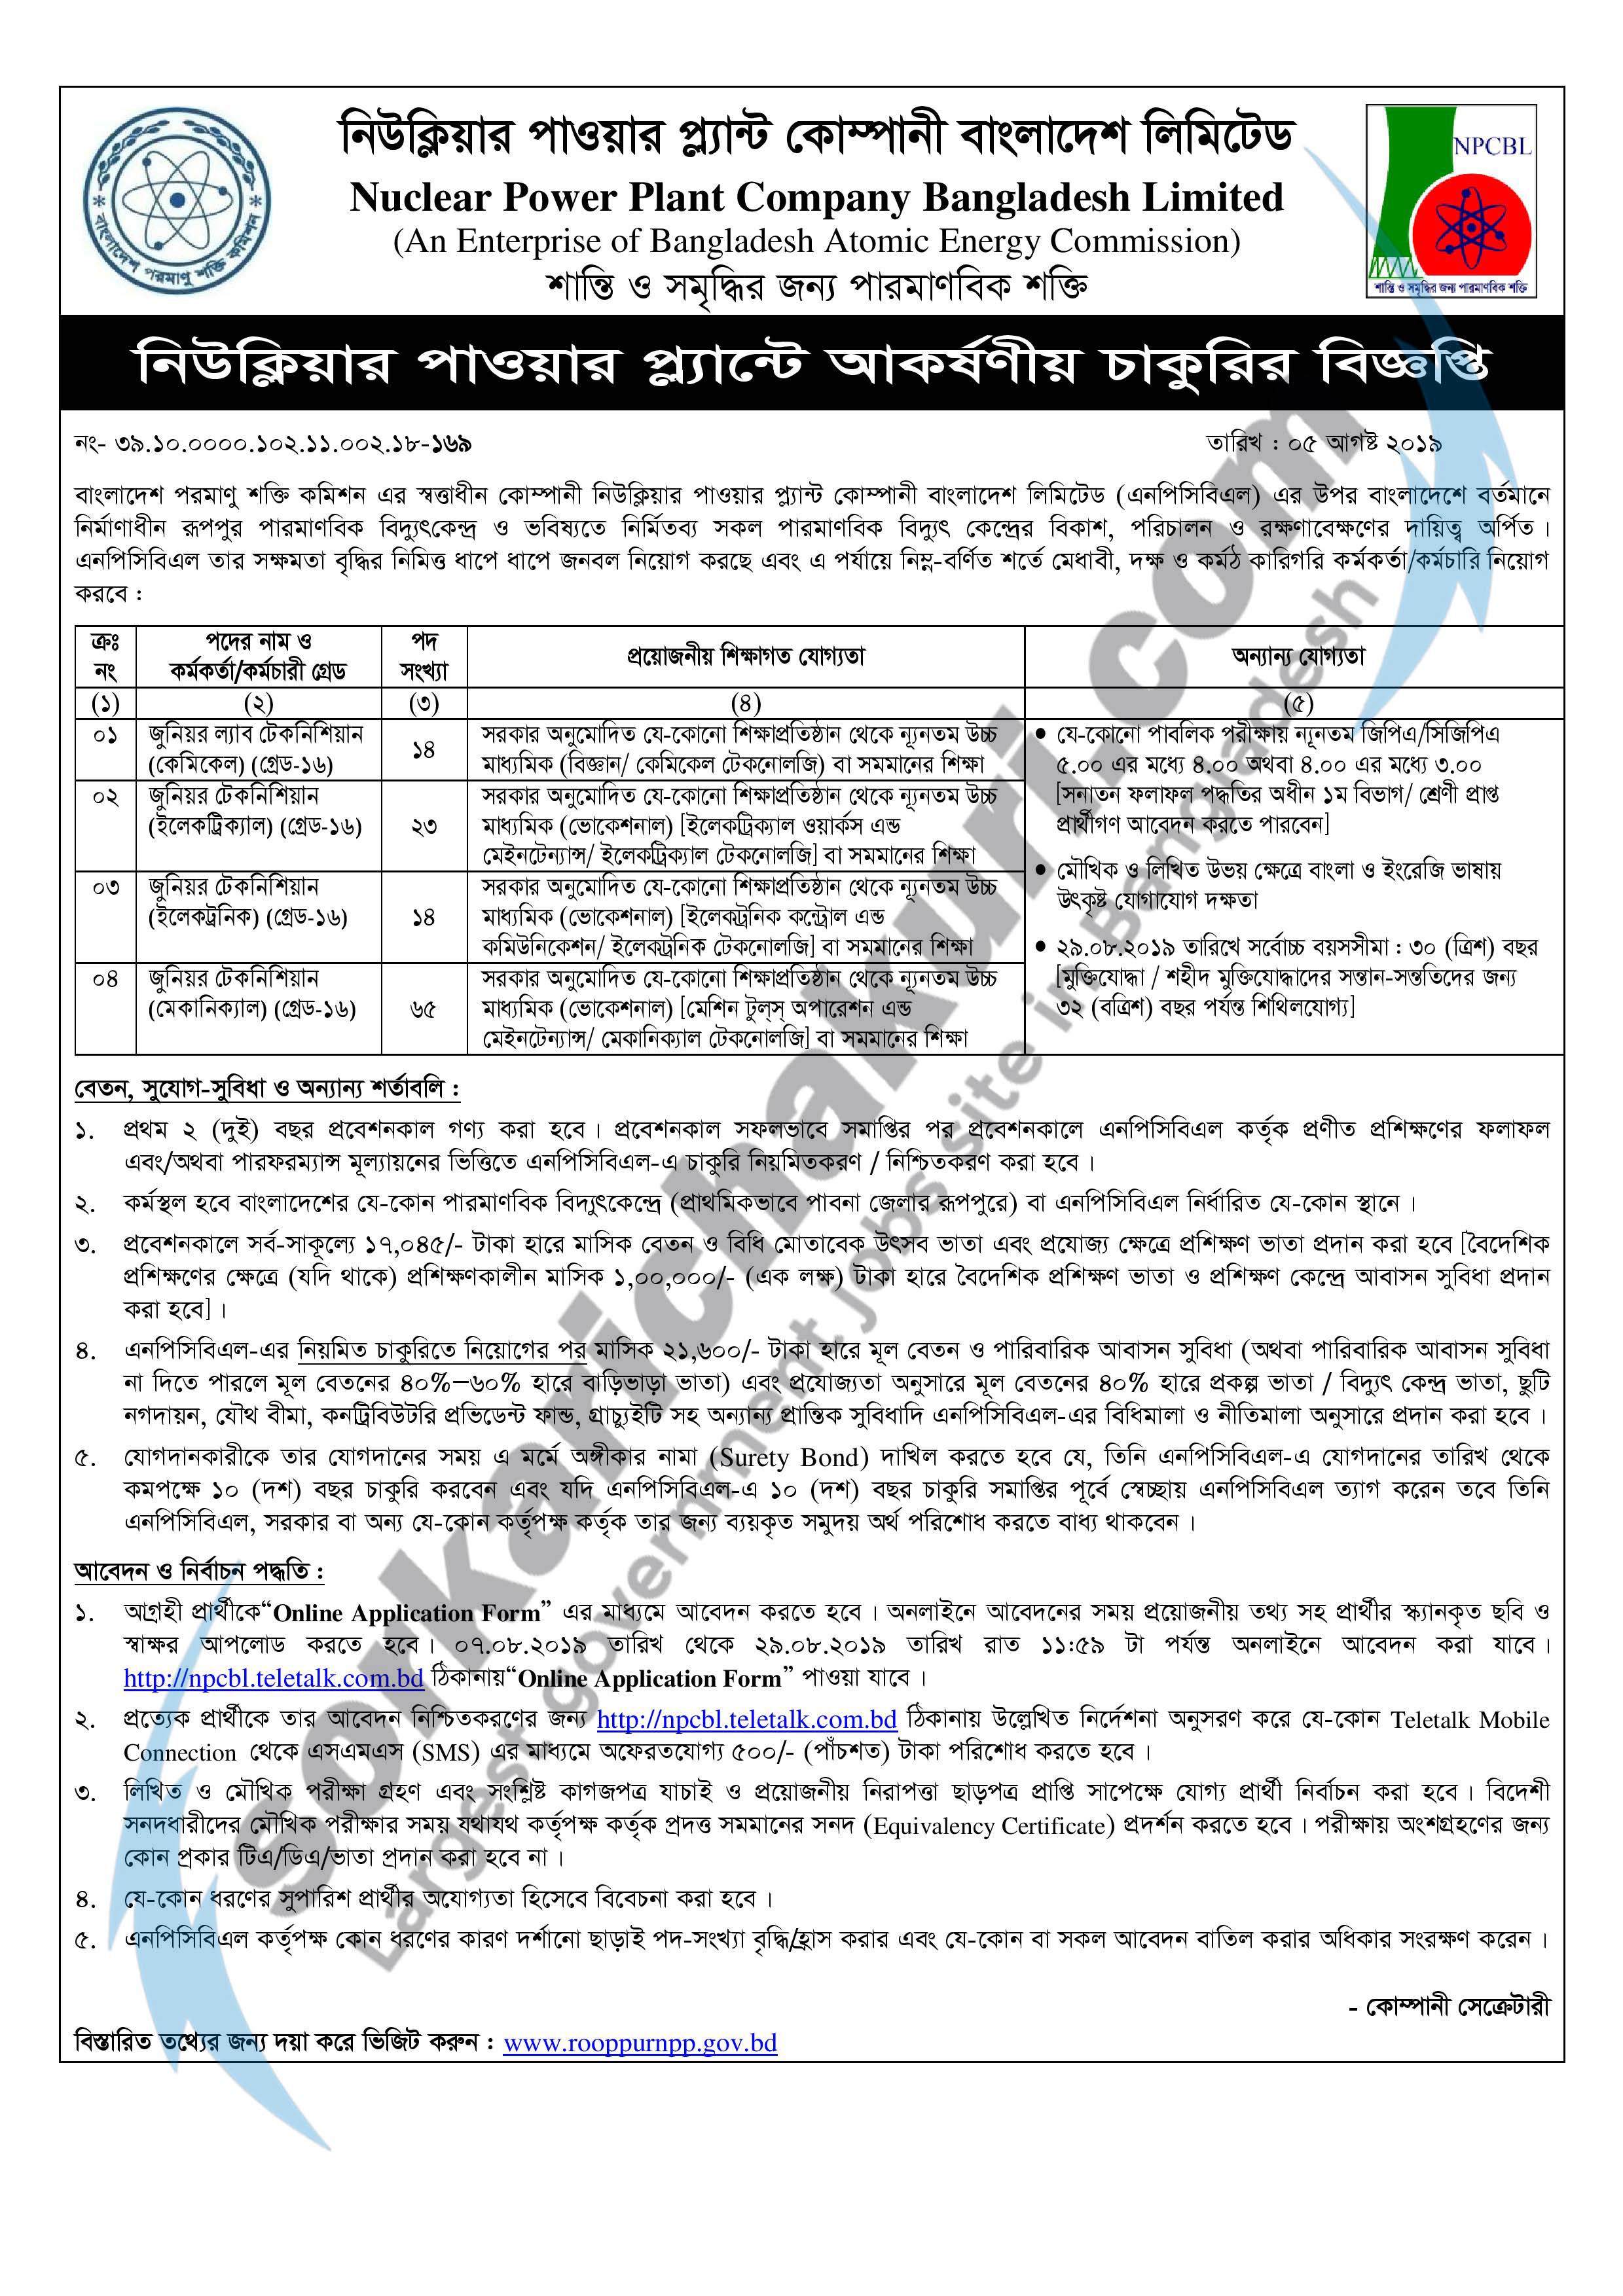 Nuclear Power Plant Company Bangladesh Limited Jobs Circular 2019